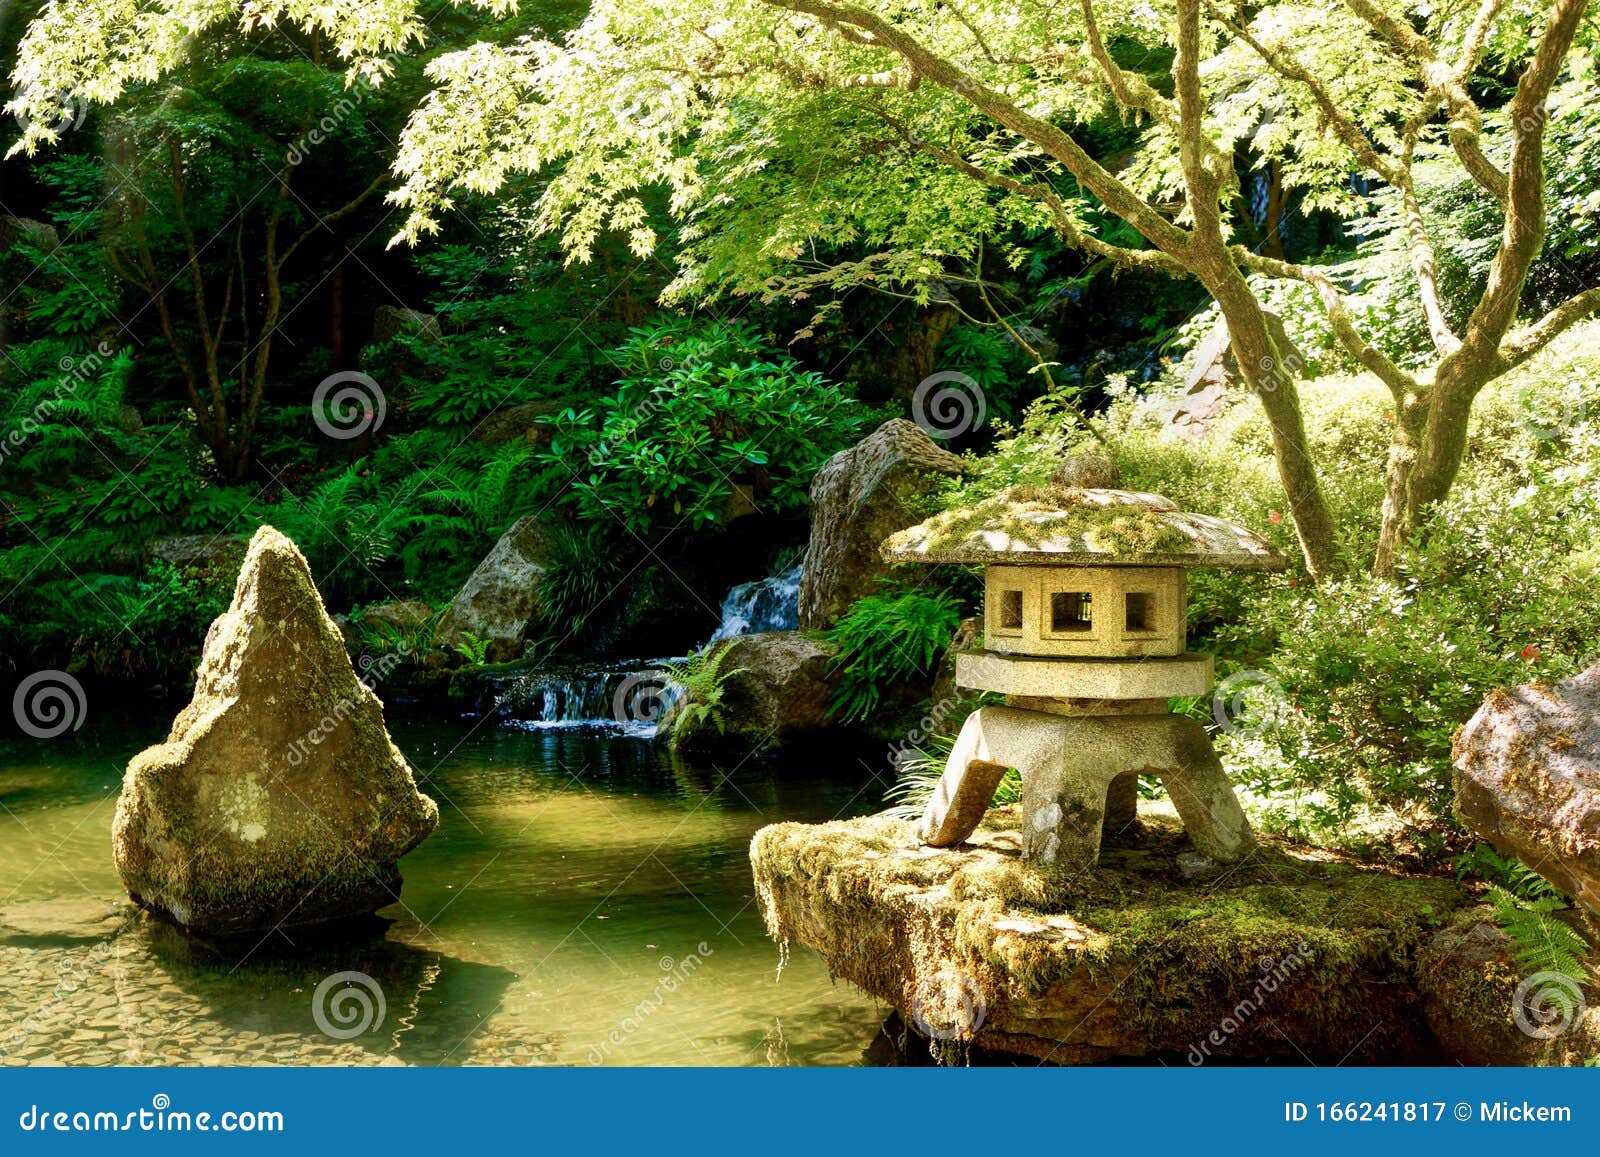 Japanese Garden Portland Oregon Stock Image Image Of Blooms